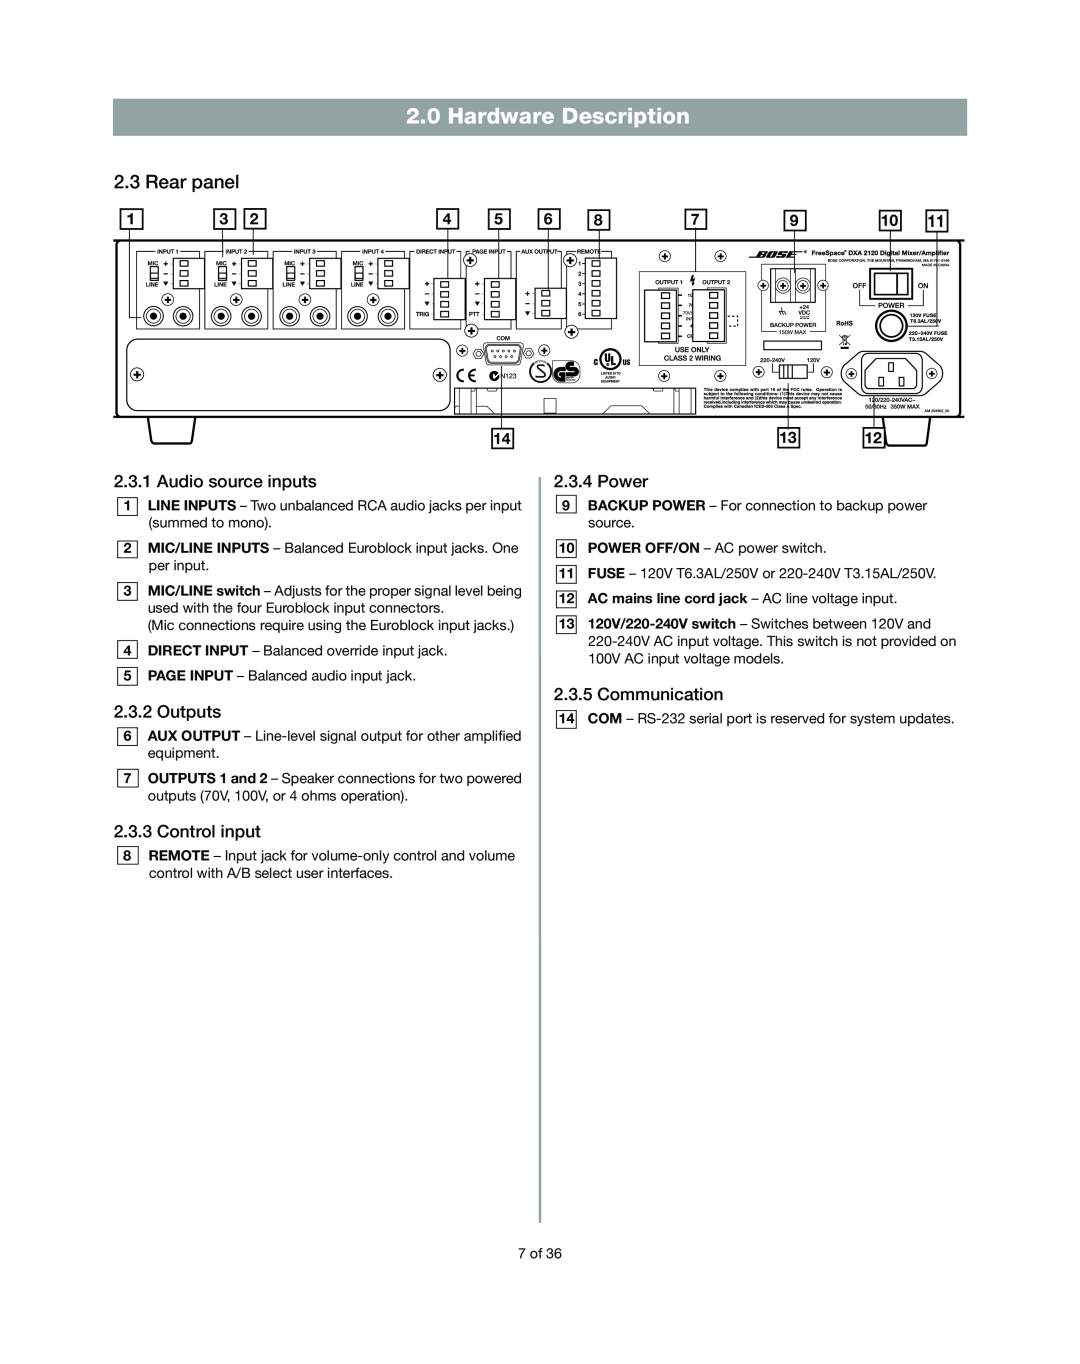 Bose DXA2120 manual Hardware Description, Rear panel, Audio source inputs, Outputs, Control input, Power, Communication 